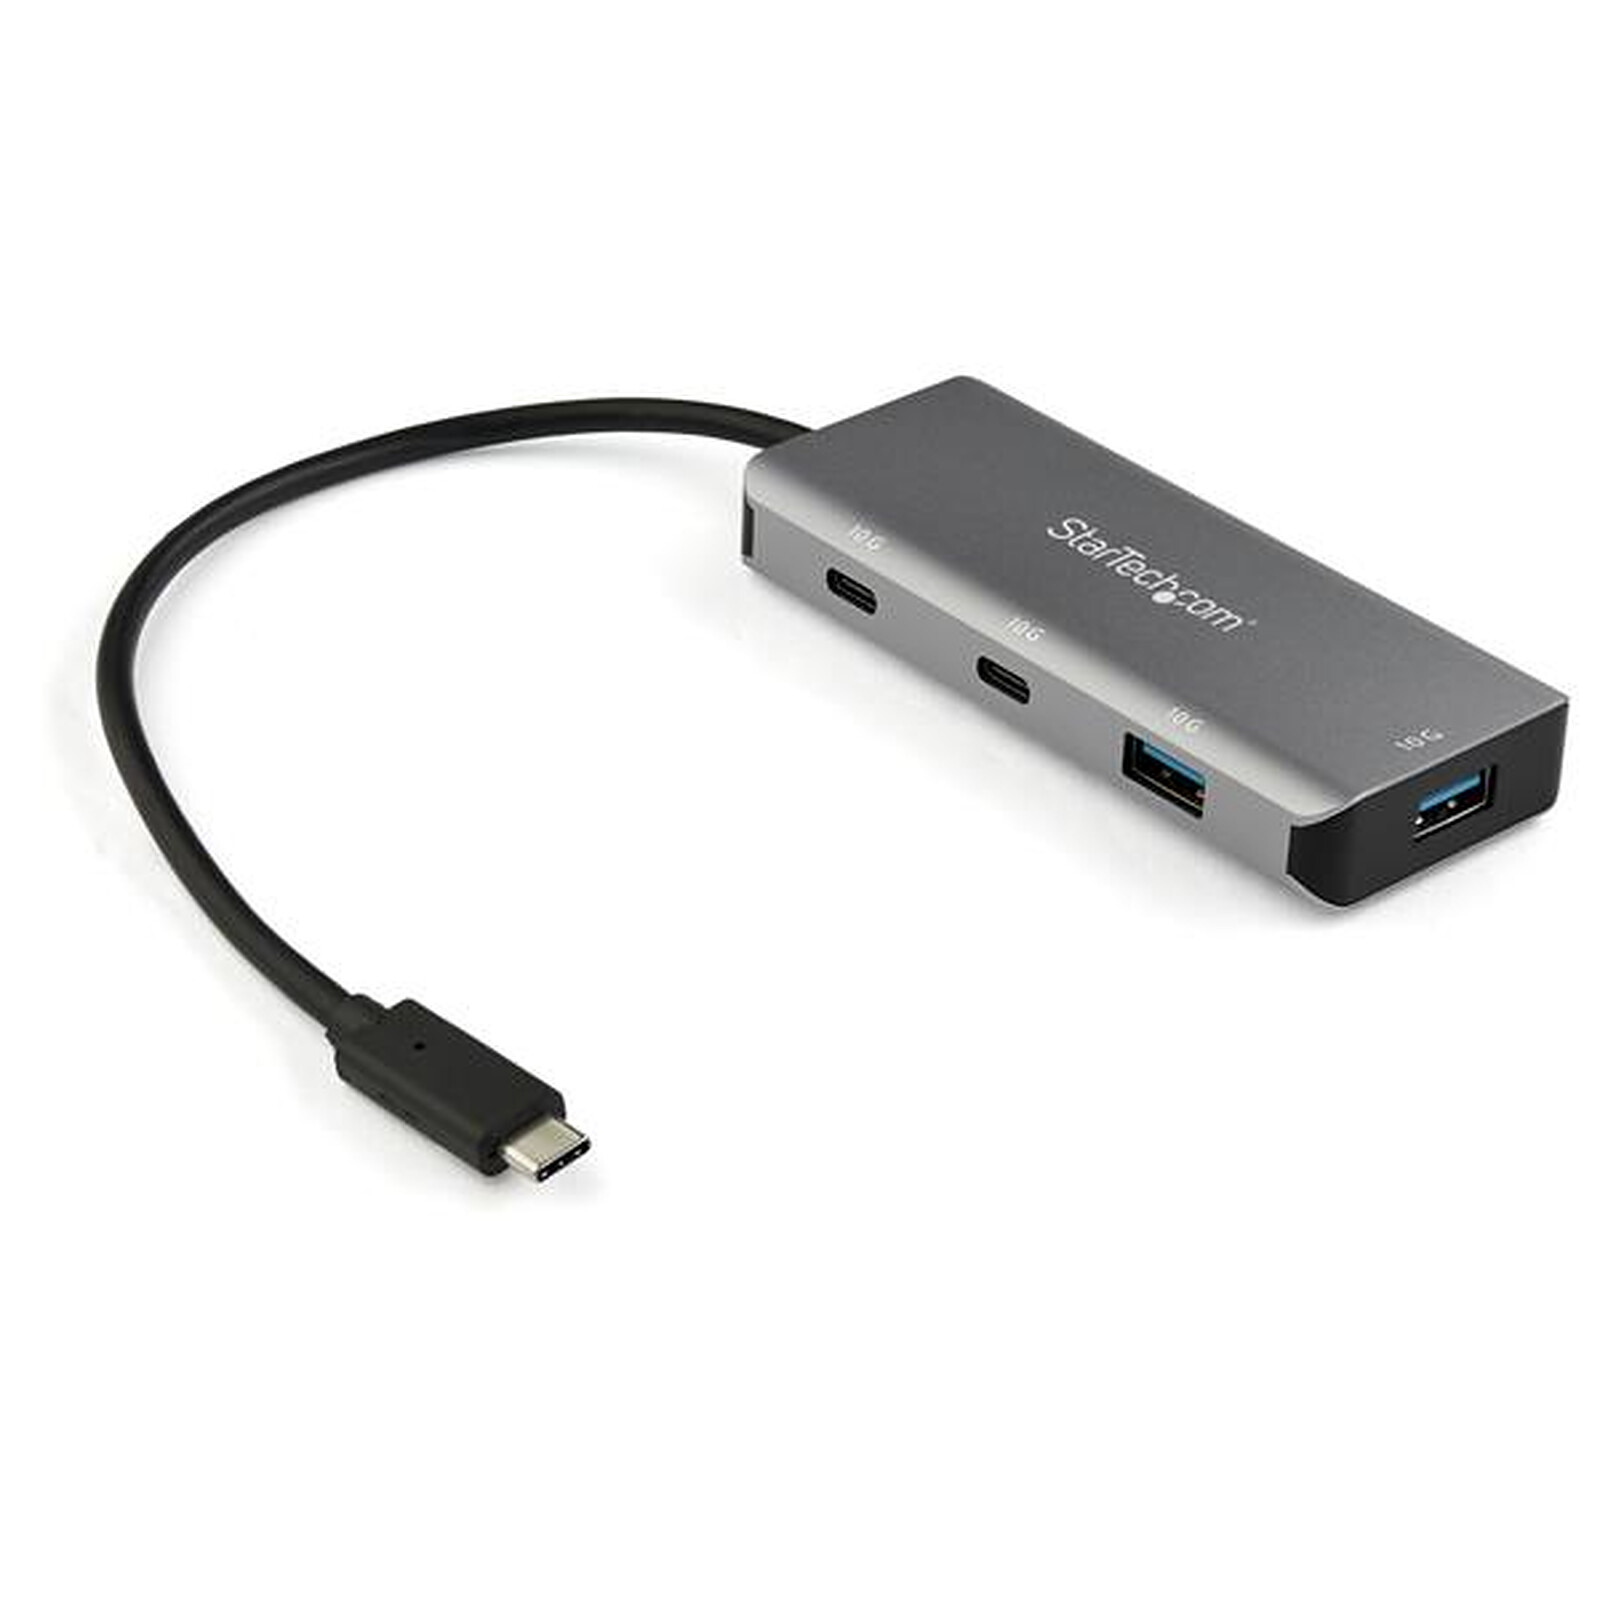 Lindy 4 Port USB 2.0 Hub: Expand Your USB Ports